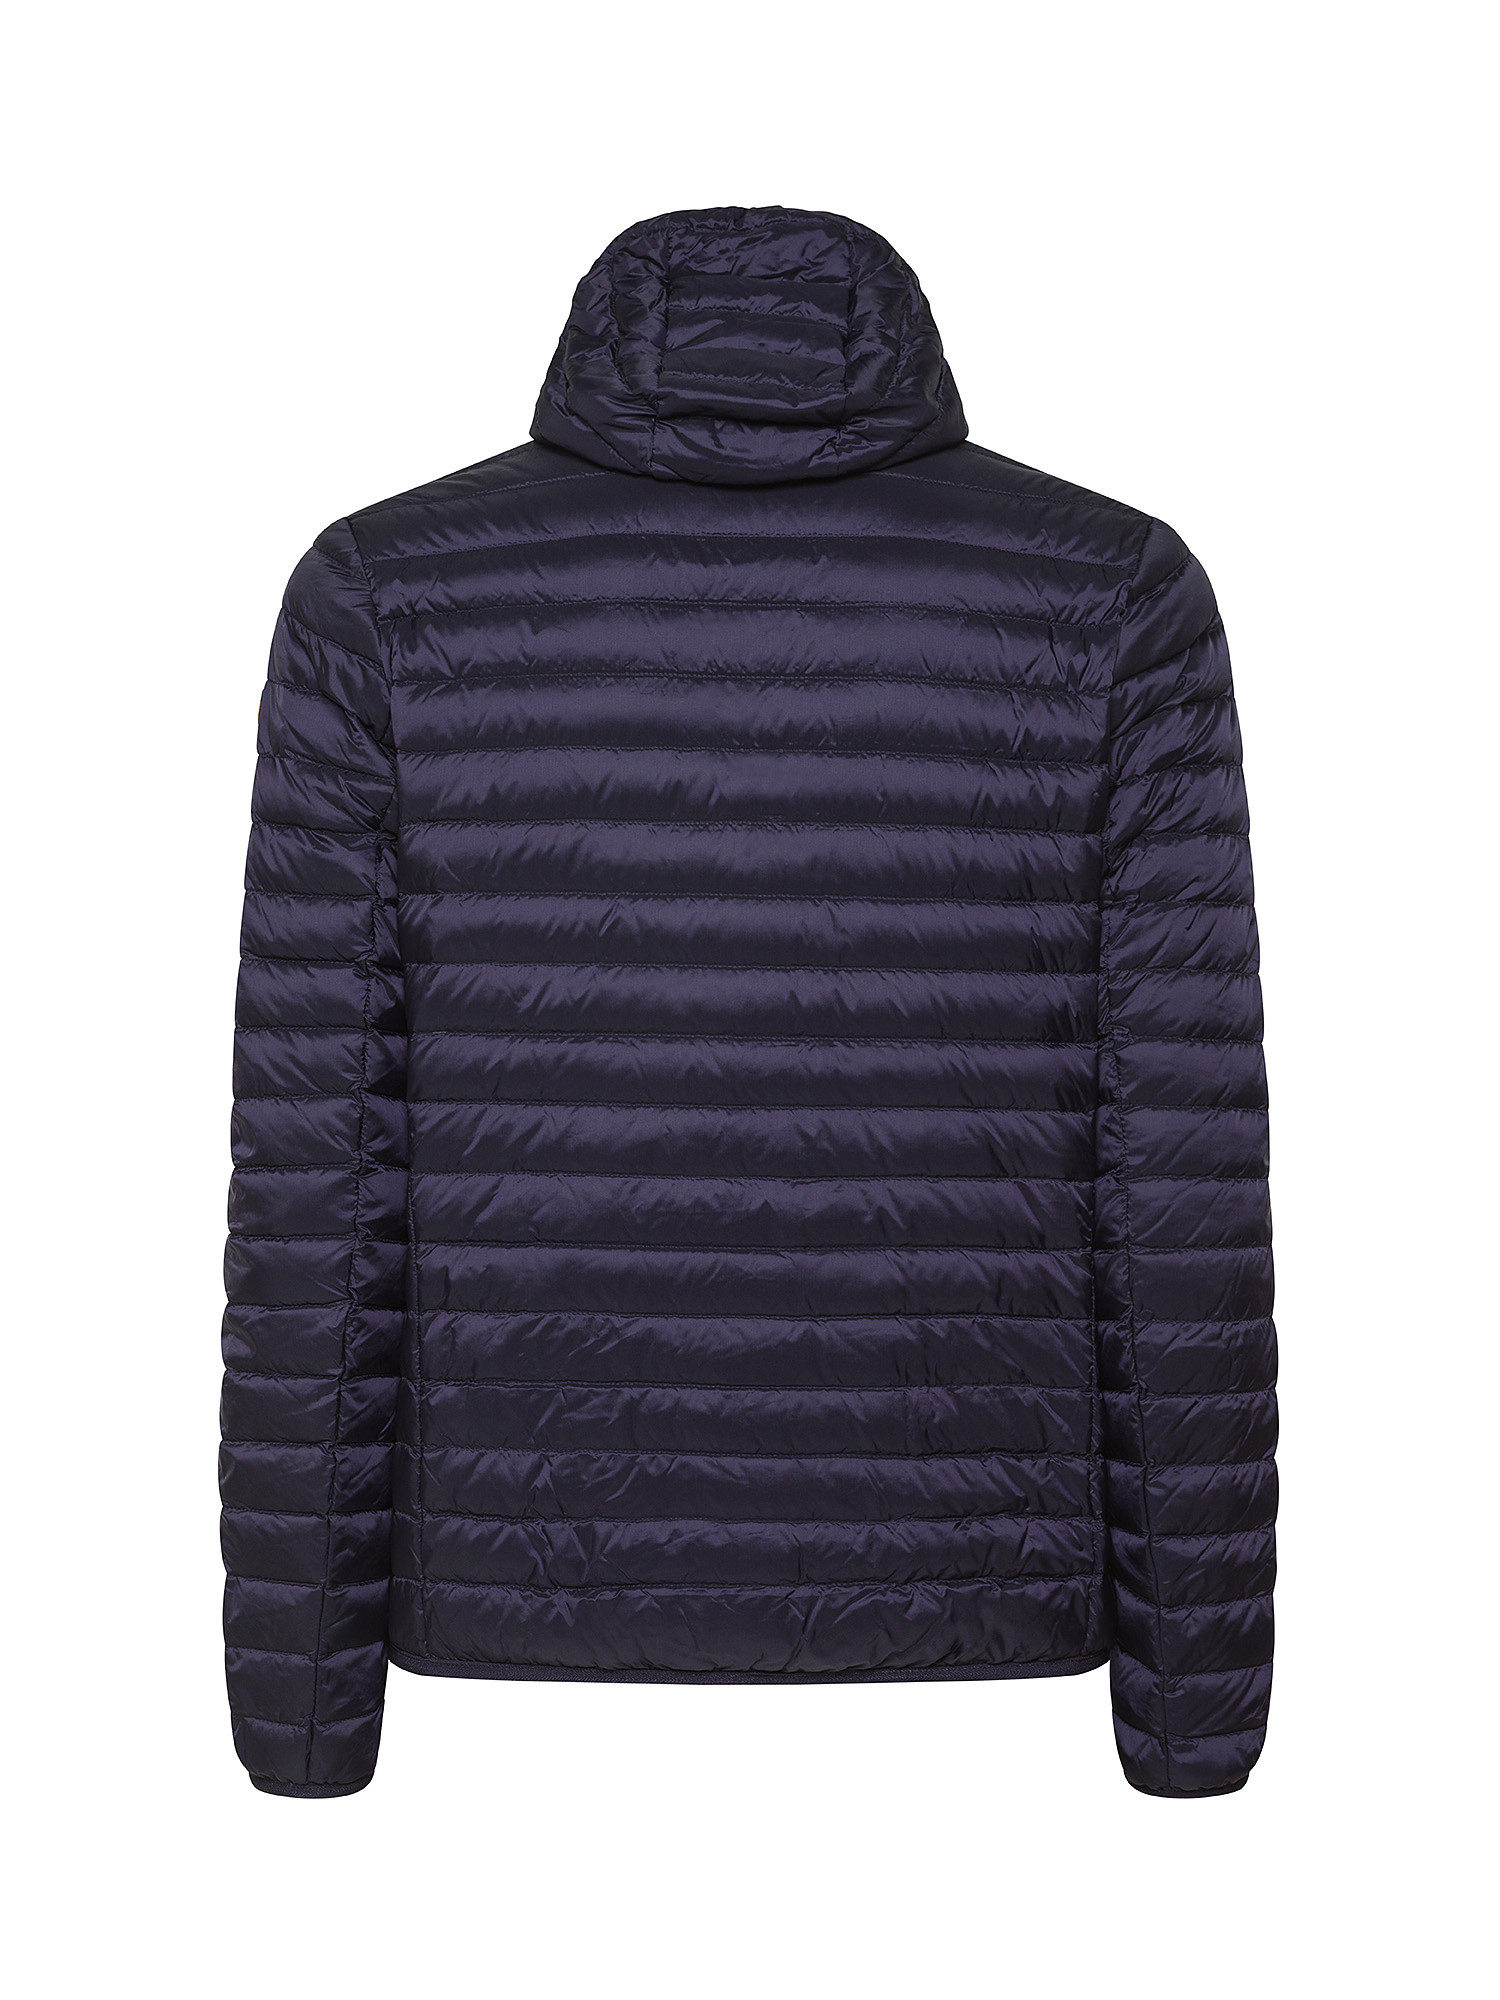 Ciesse Piumini - Larry nylon down jacket with hood, Dark Blue, large image number 1